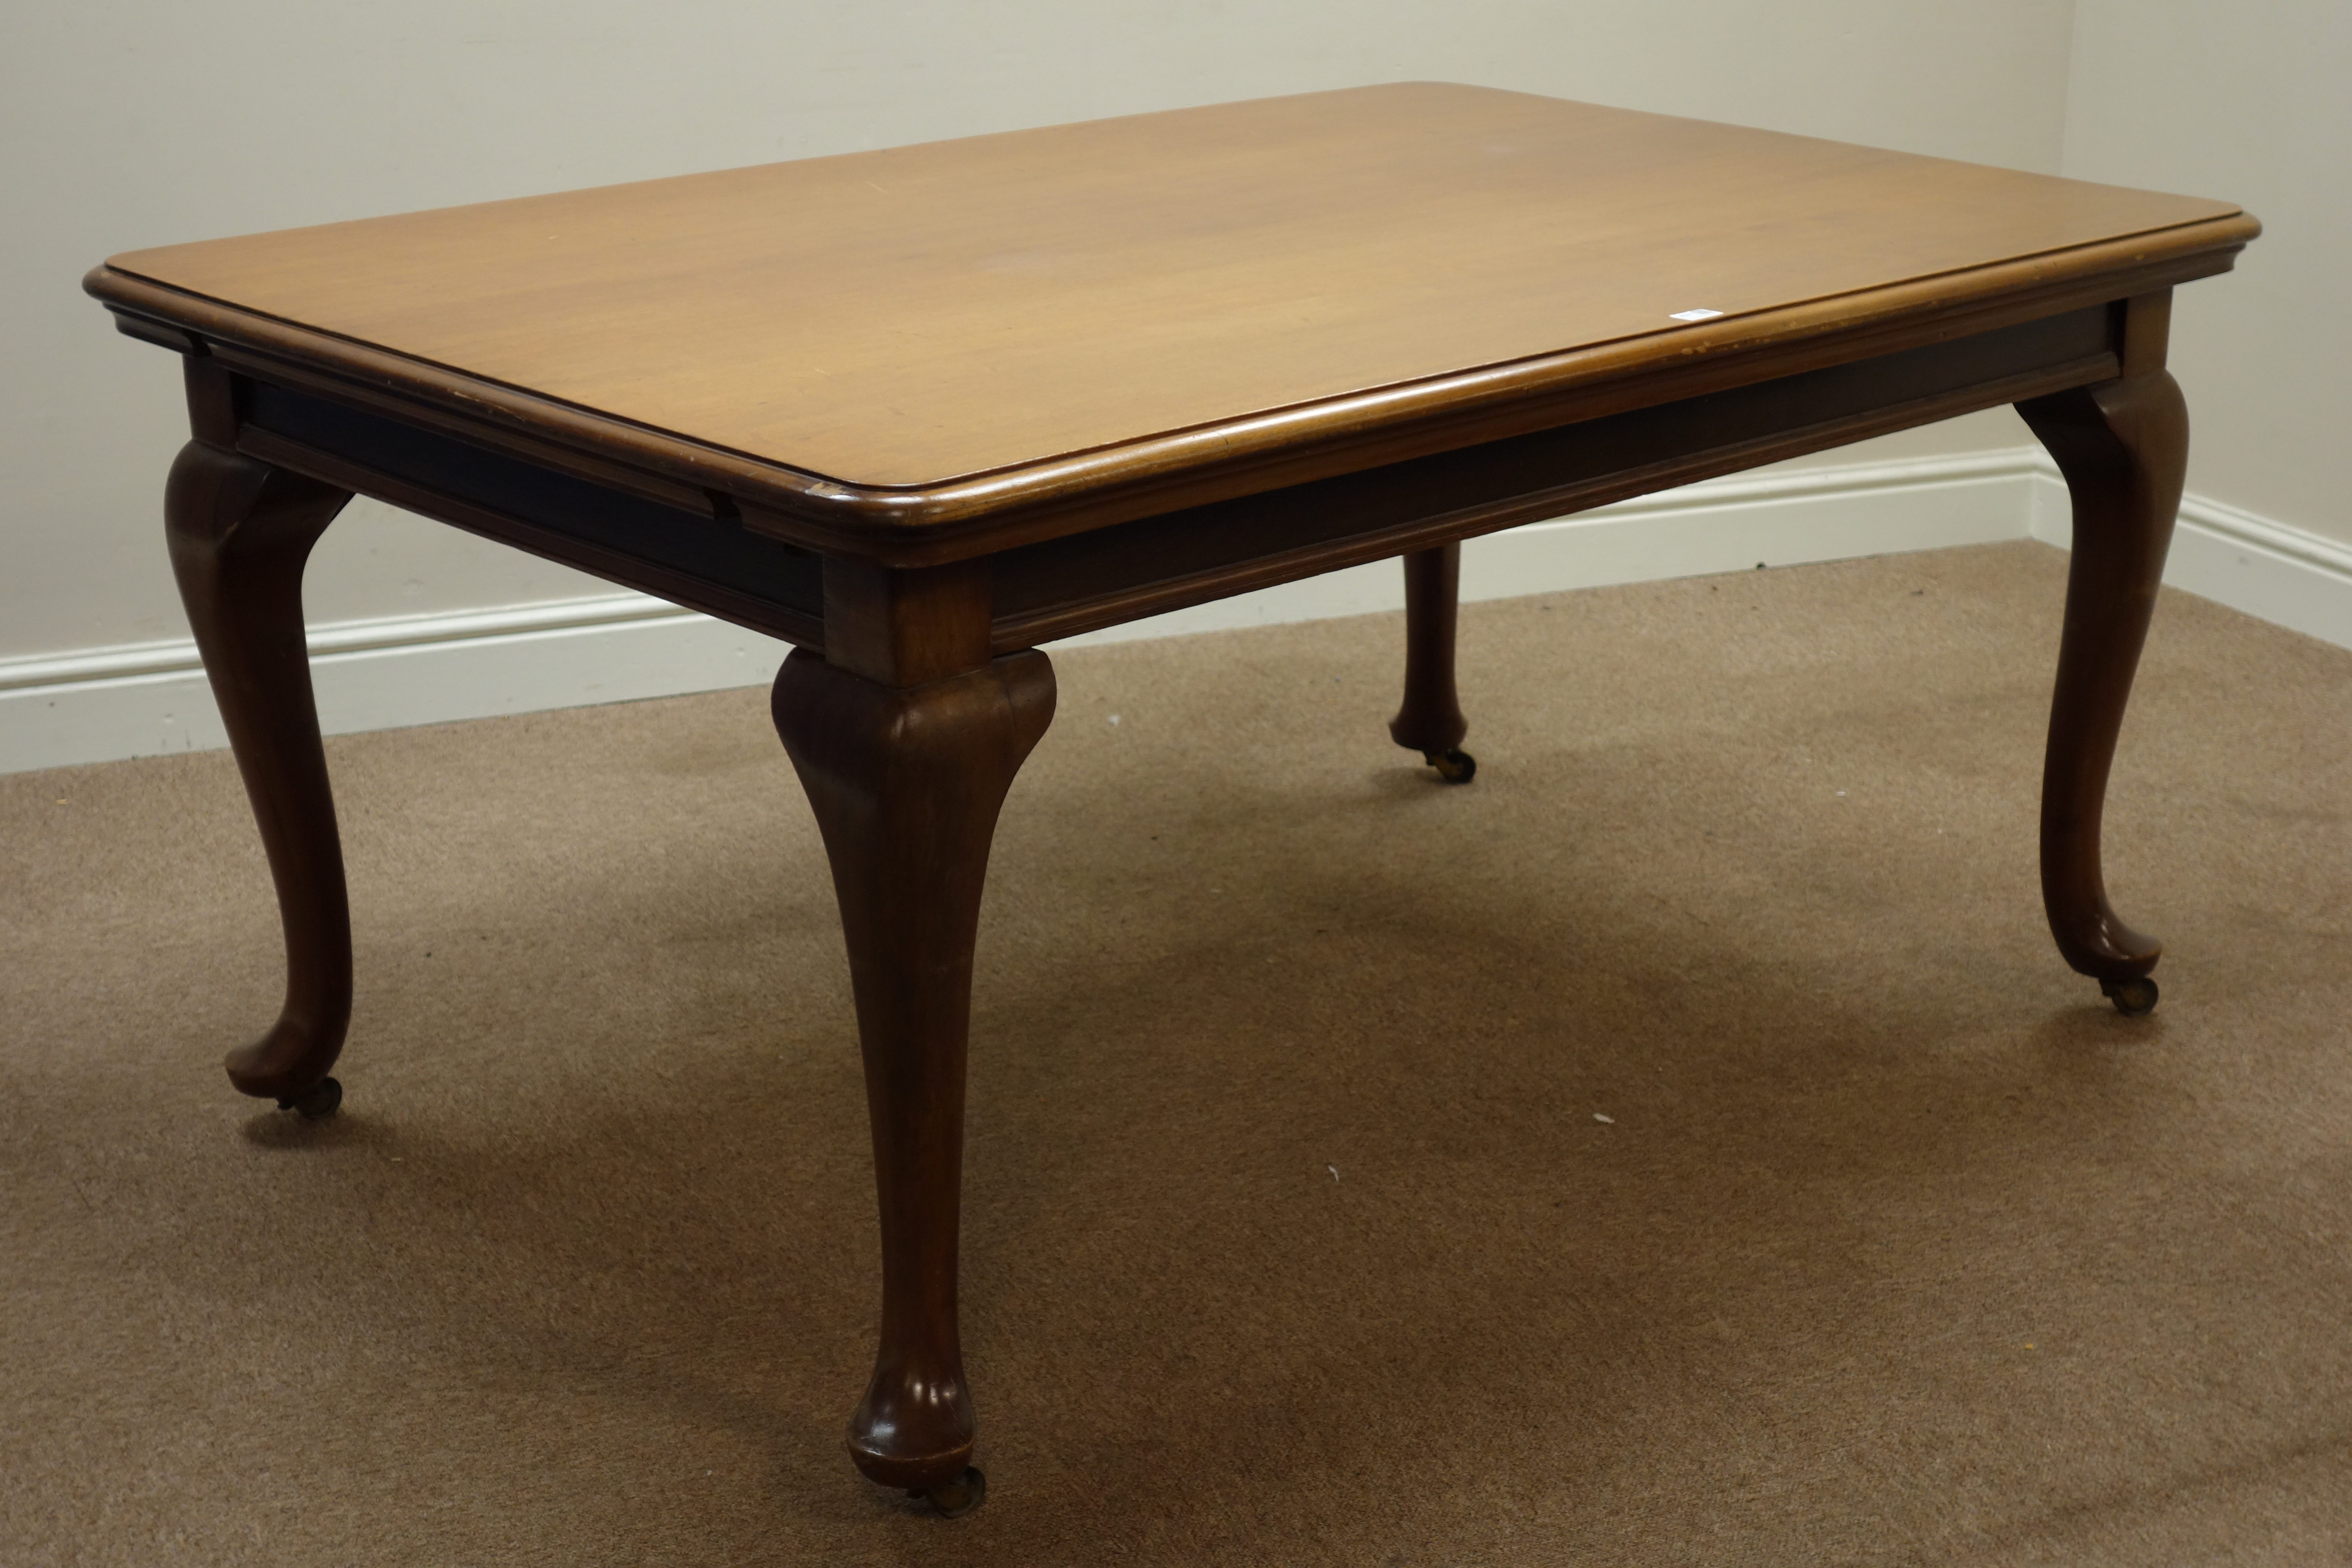 Early 20th century rectangular mahogany dining table, 153cm x 99cm,